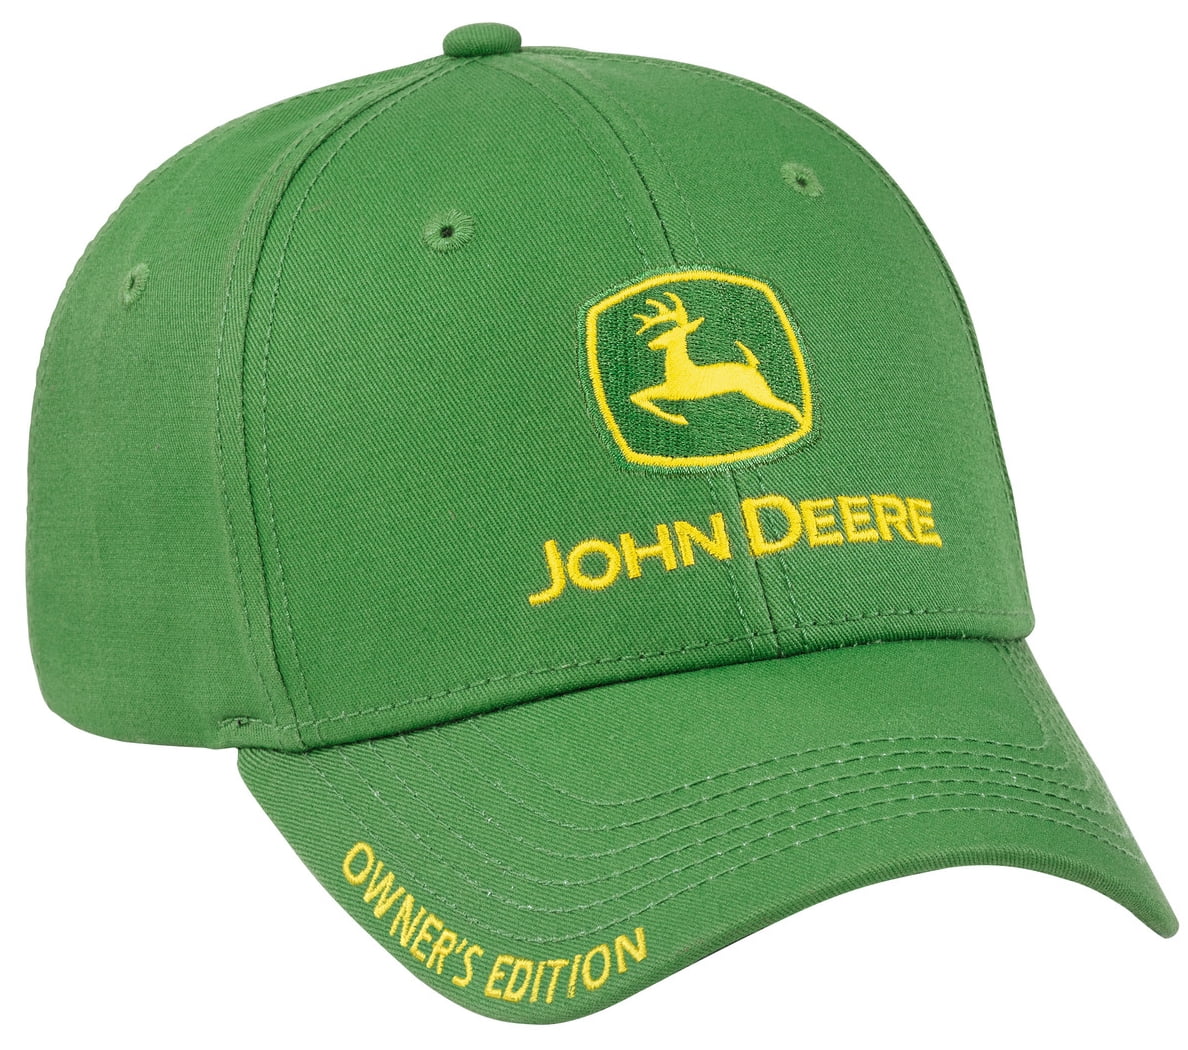 John Deere Men's Green Owners Edition Cap/Hat - LP70010 - Walmart.com